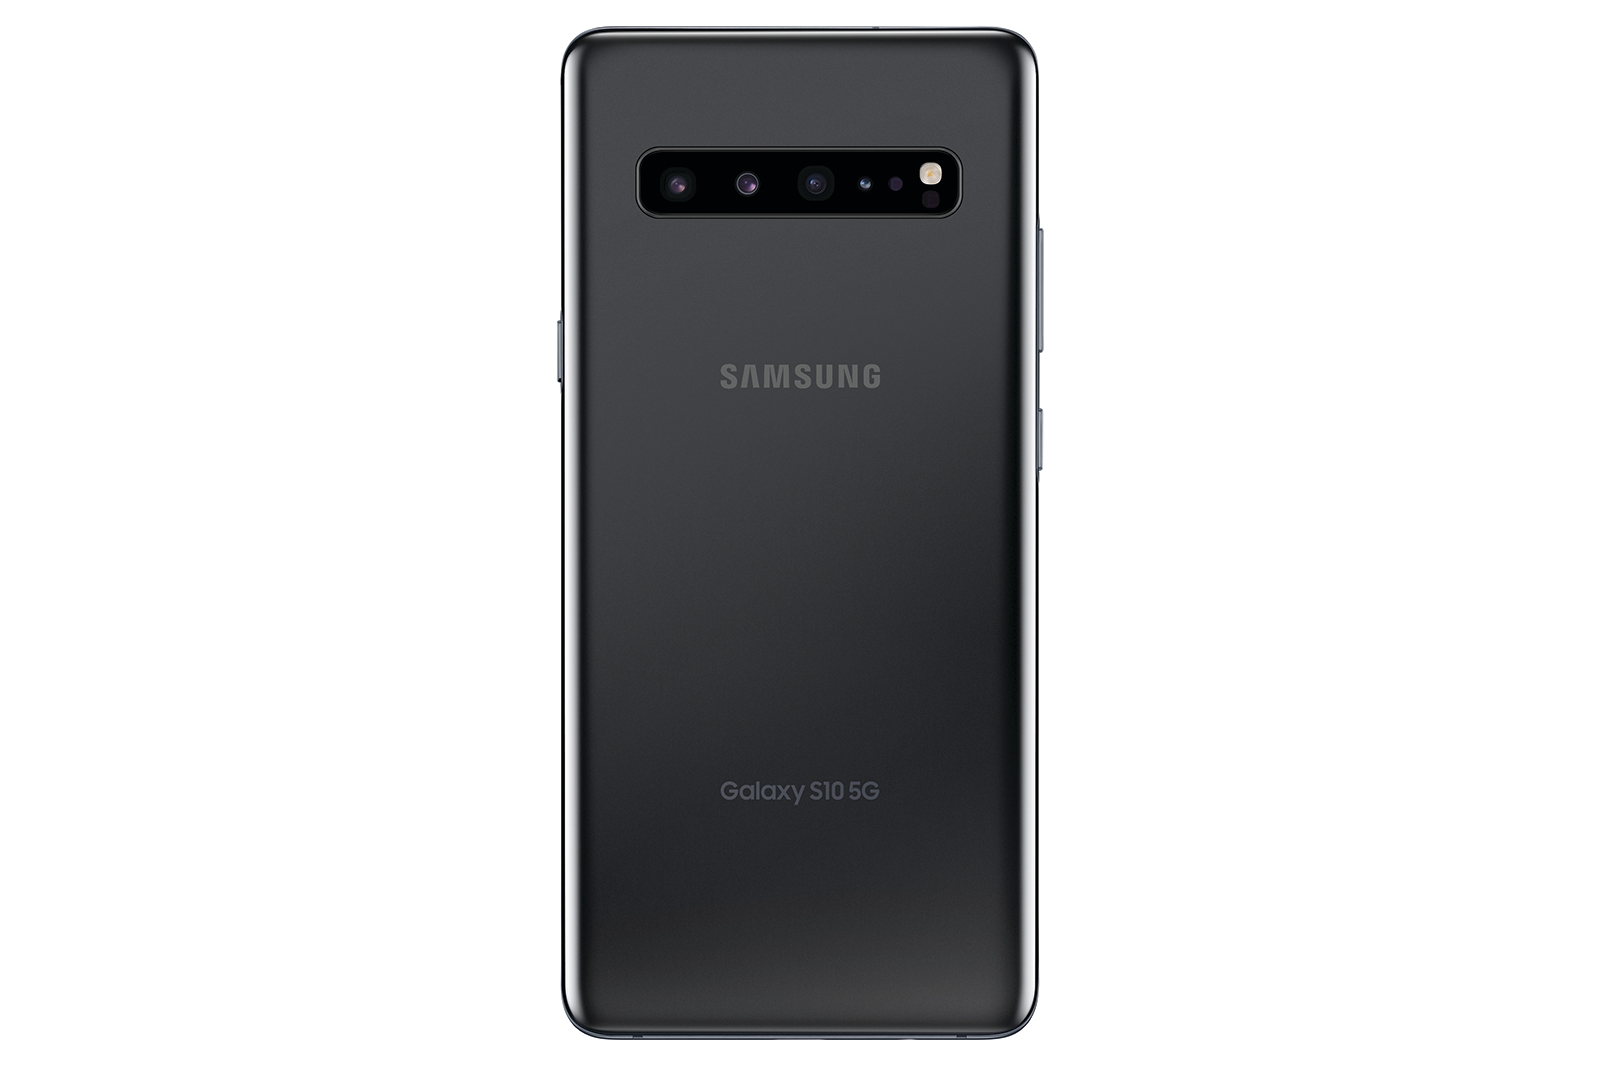 Galaxy S10 5g Black Verizon 512gb Phones Sm G977uzaevzw Samsung Us